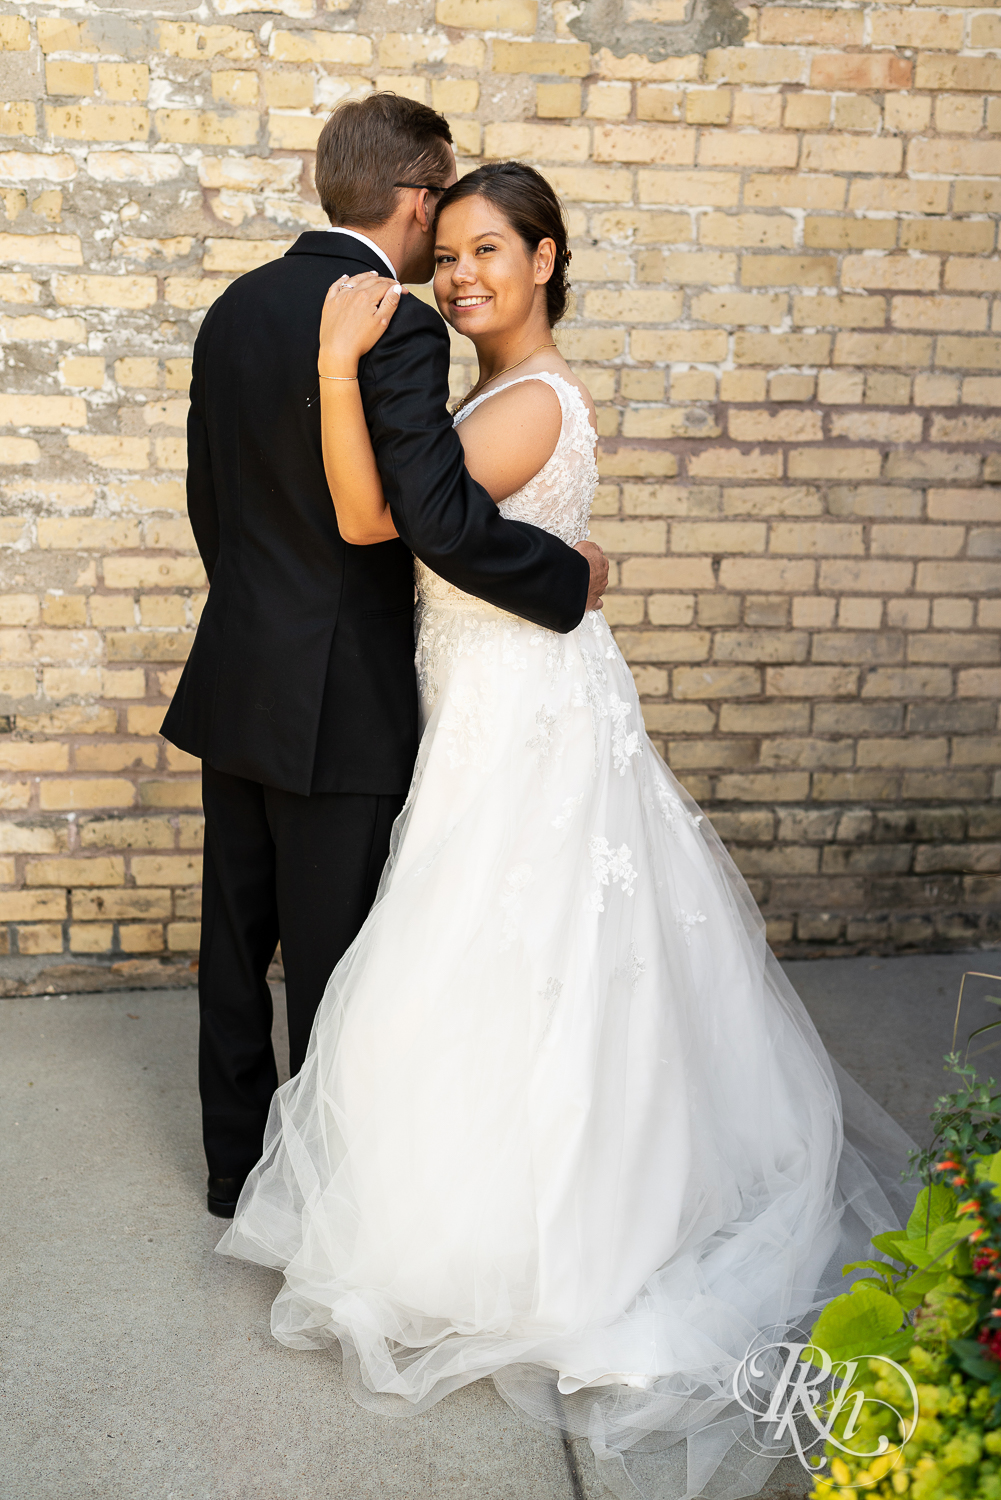 Bride and groom smile at Kellerman's Event Center in White Bear Lake, Minnesota.